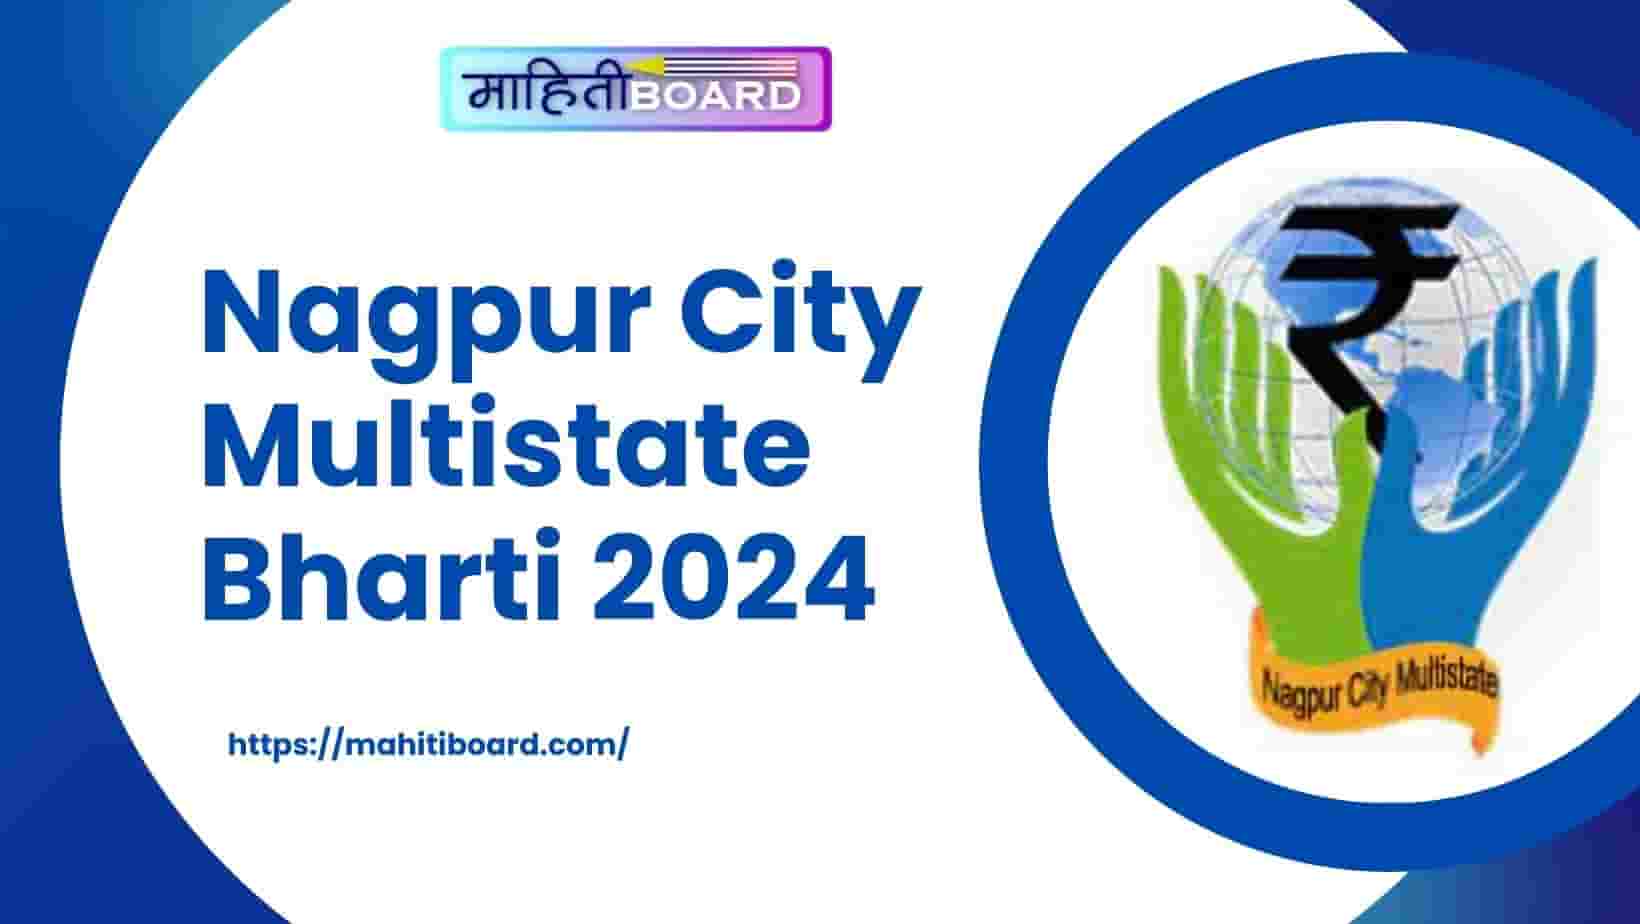 Nagpur City Multistate Bharti 2024